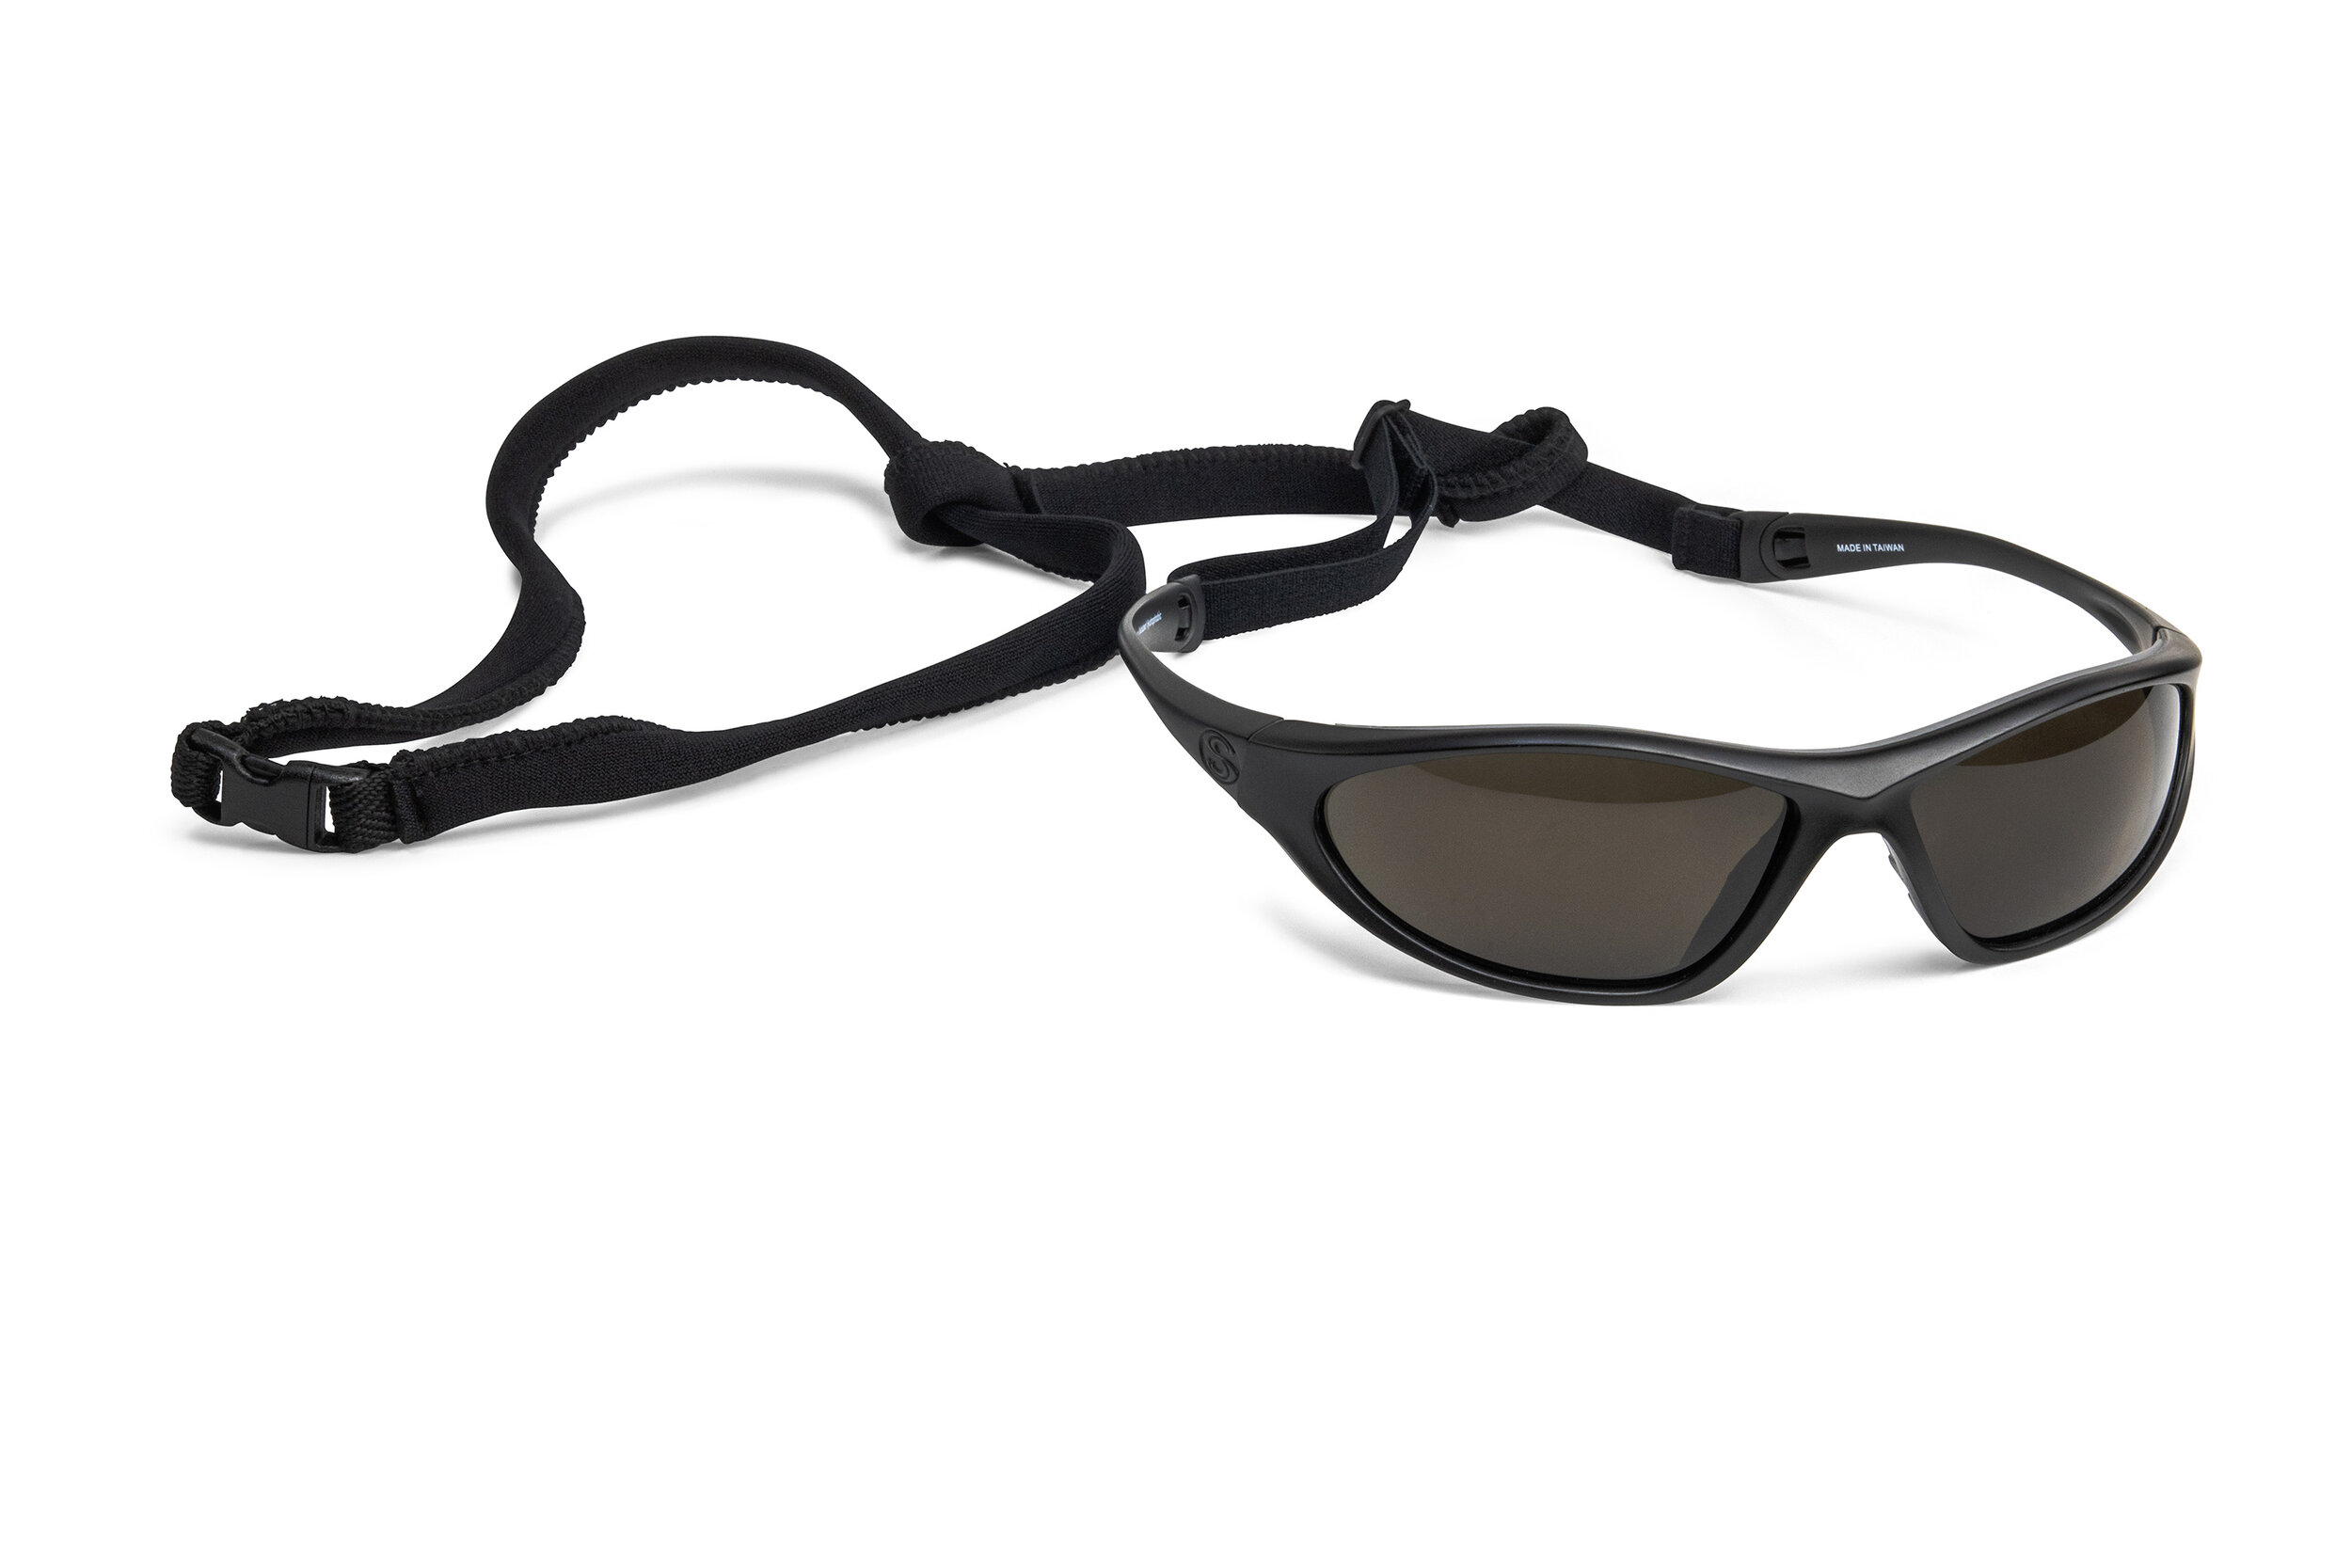 Surf Shades Original Water Sport Polarized Sunglasses